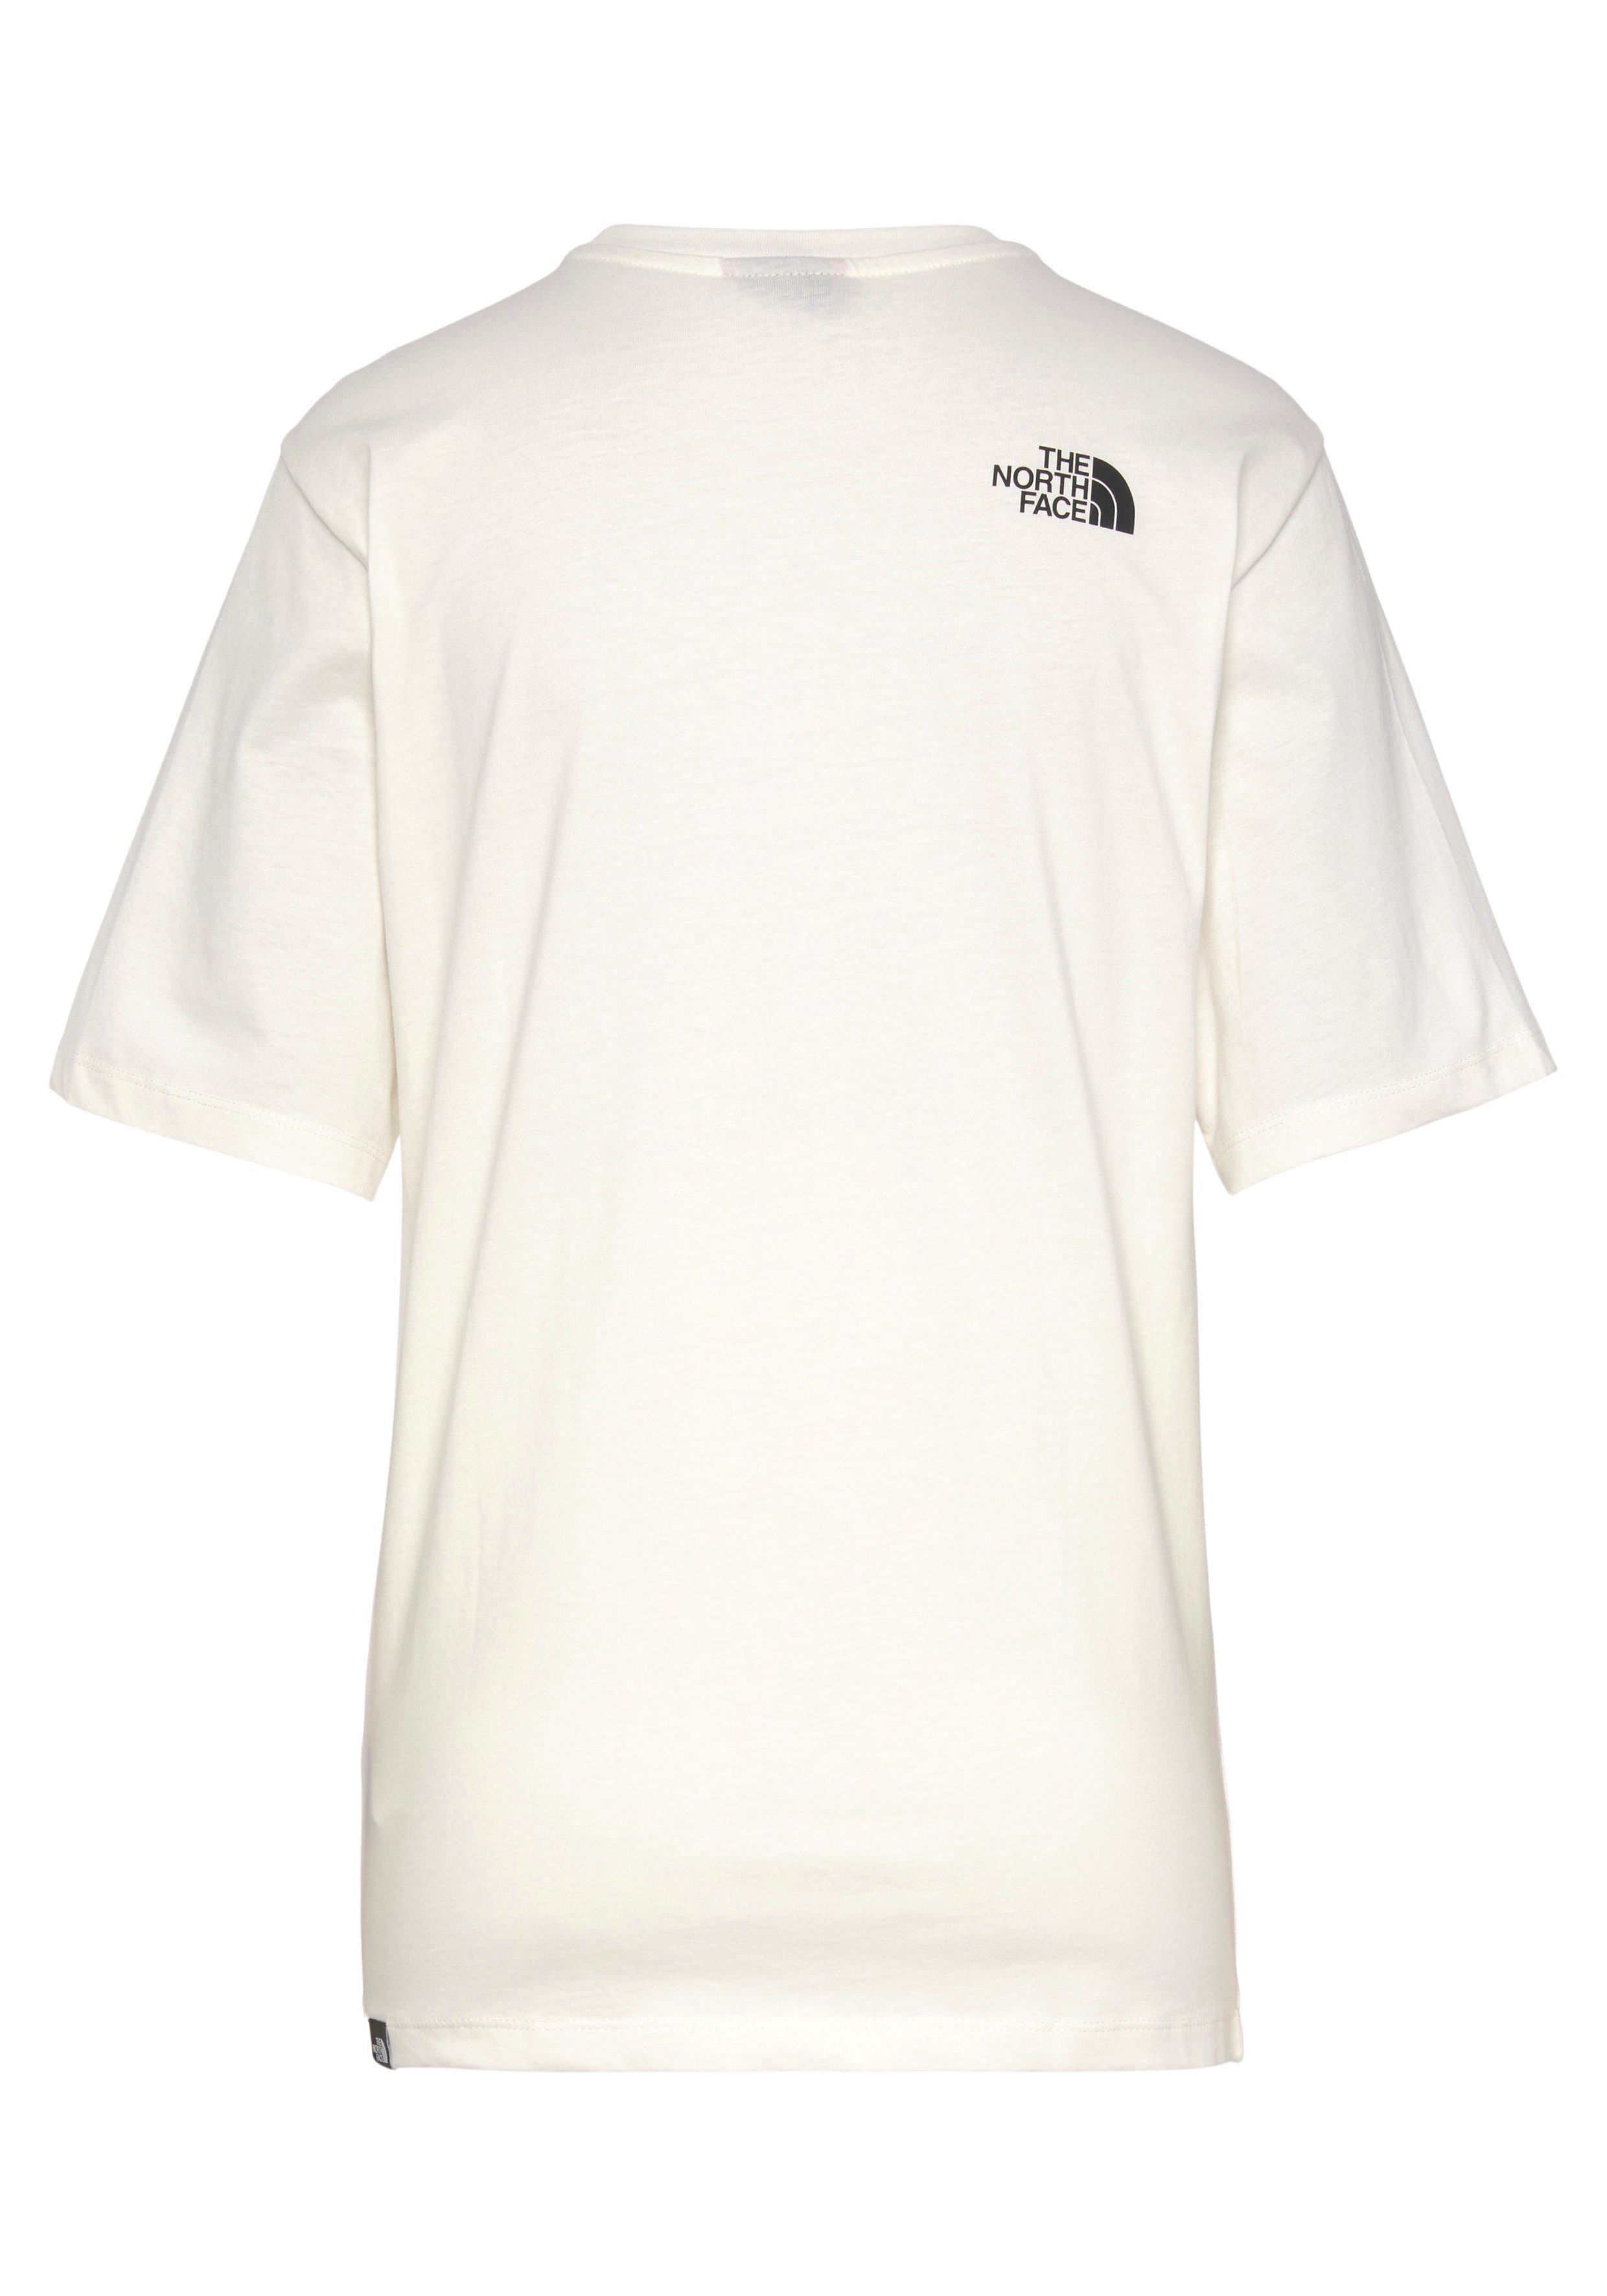 The North Face T-Shirt W der EASY TEE mit Brust white auf Logodruck RELAXED